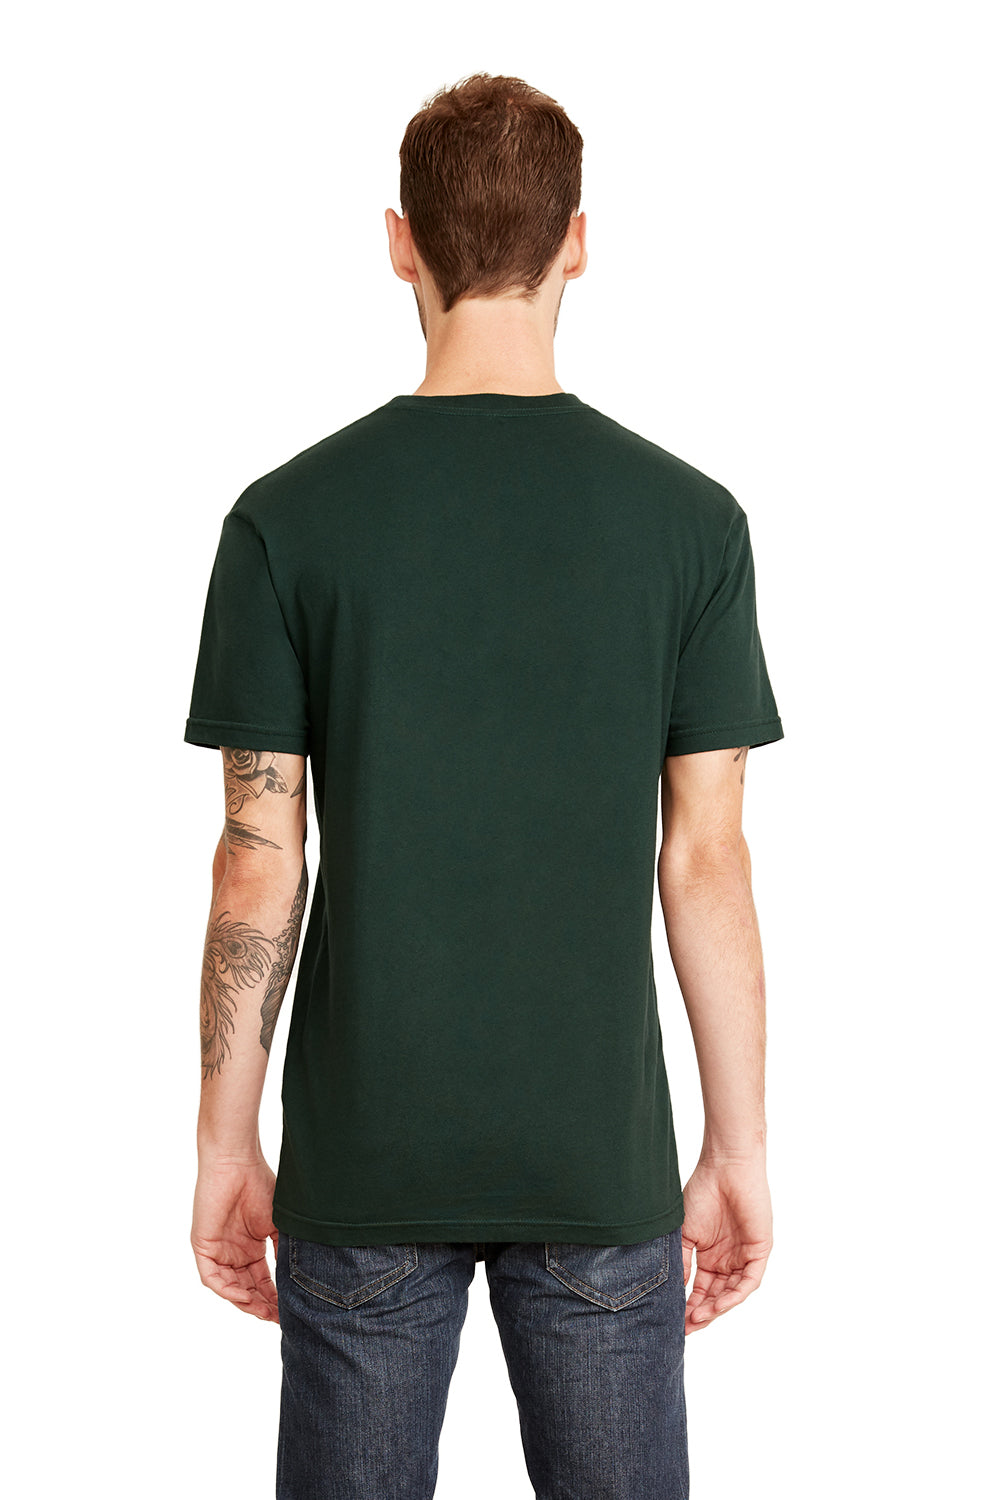 Next Level 3605 Mens Fine Jersey Short Sleeve Crewneck T-Shirt w/ Pocket Forest Green Back